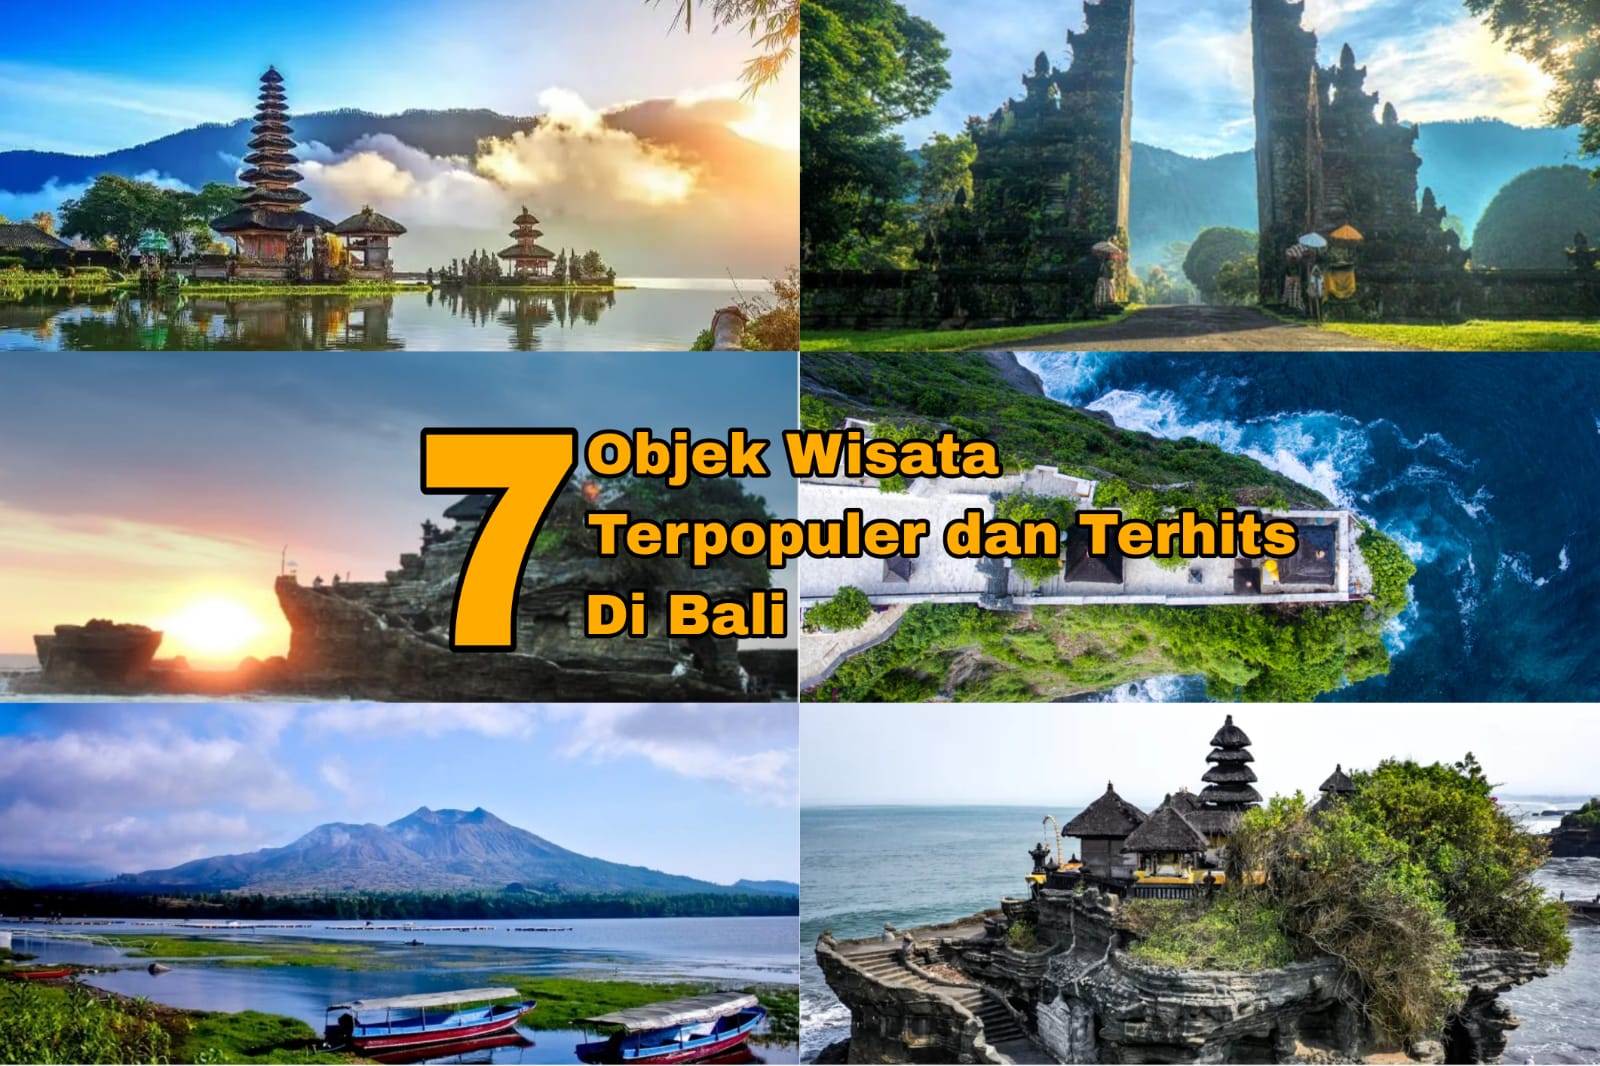 7 Objek Wisata Terpopuler dan Terhits di Bali, Keindahannya Bikin Malas Pulang